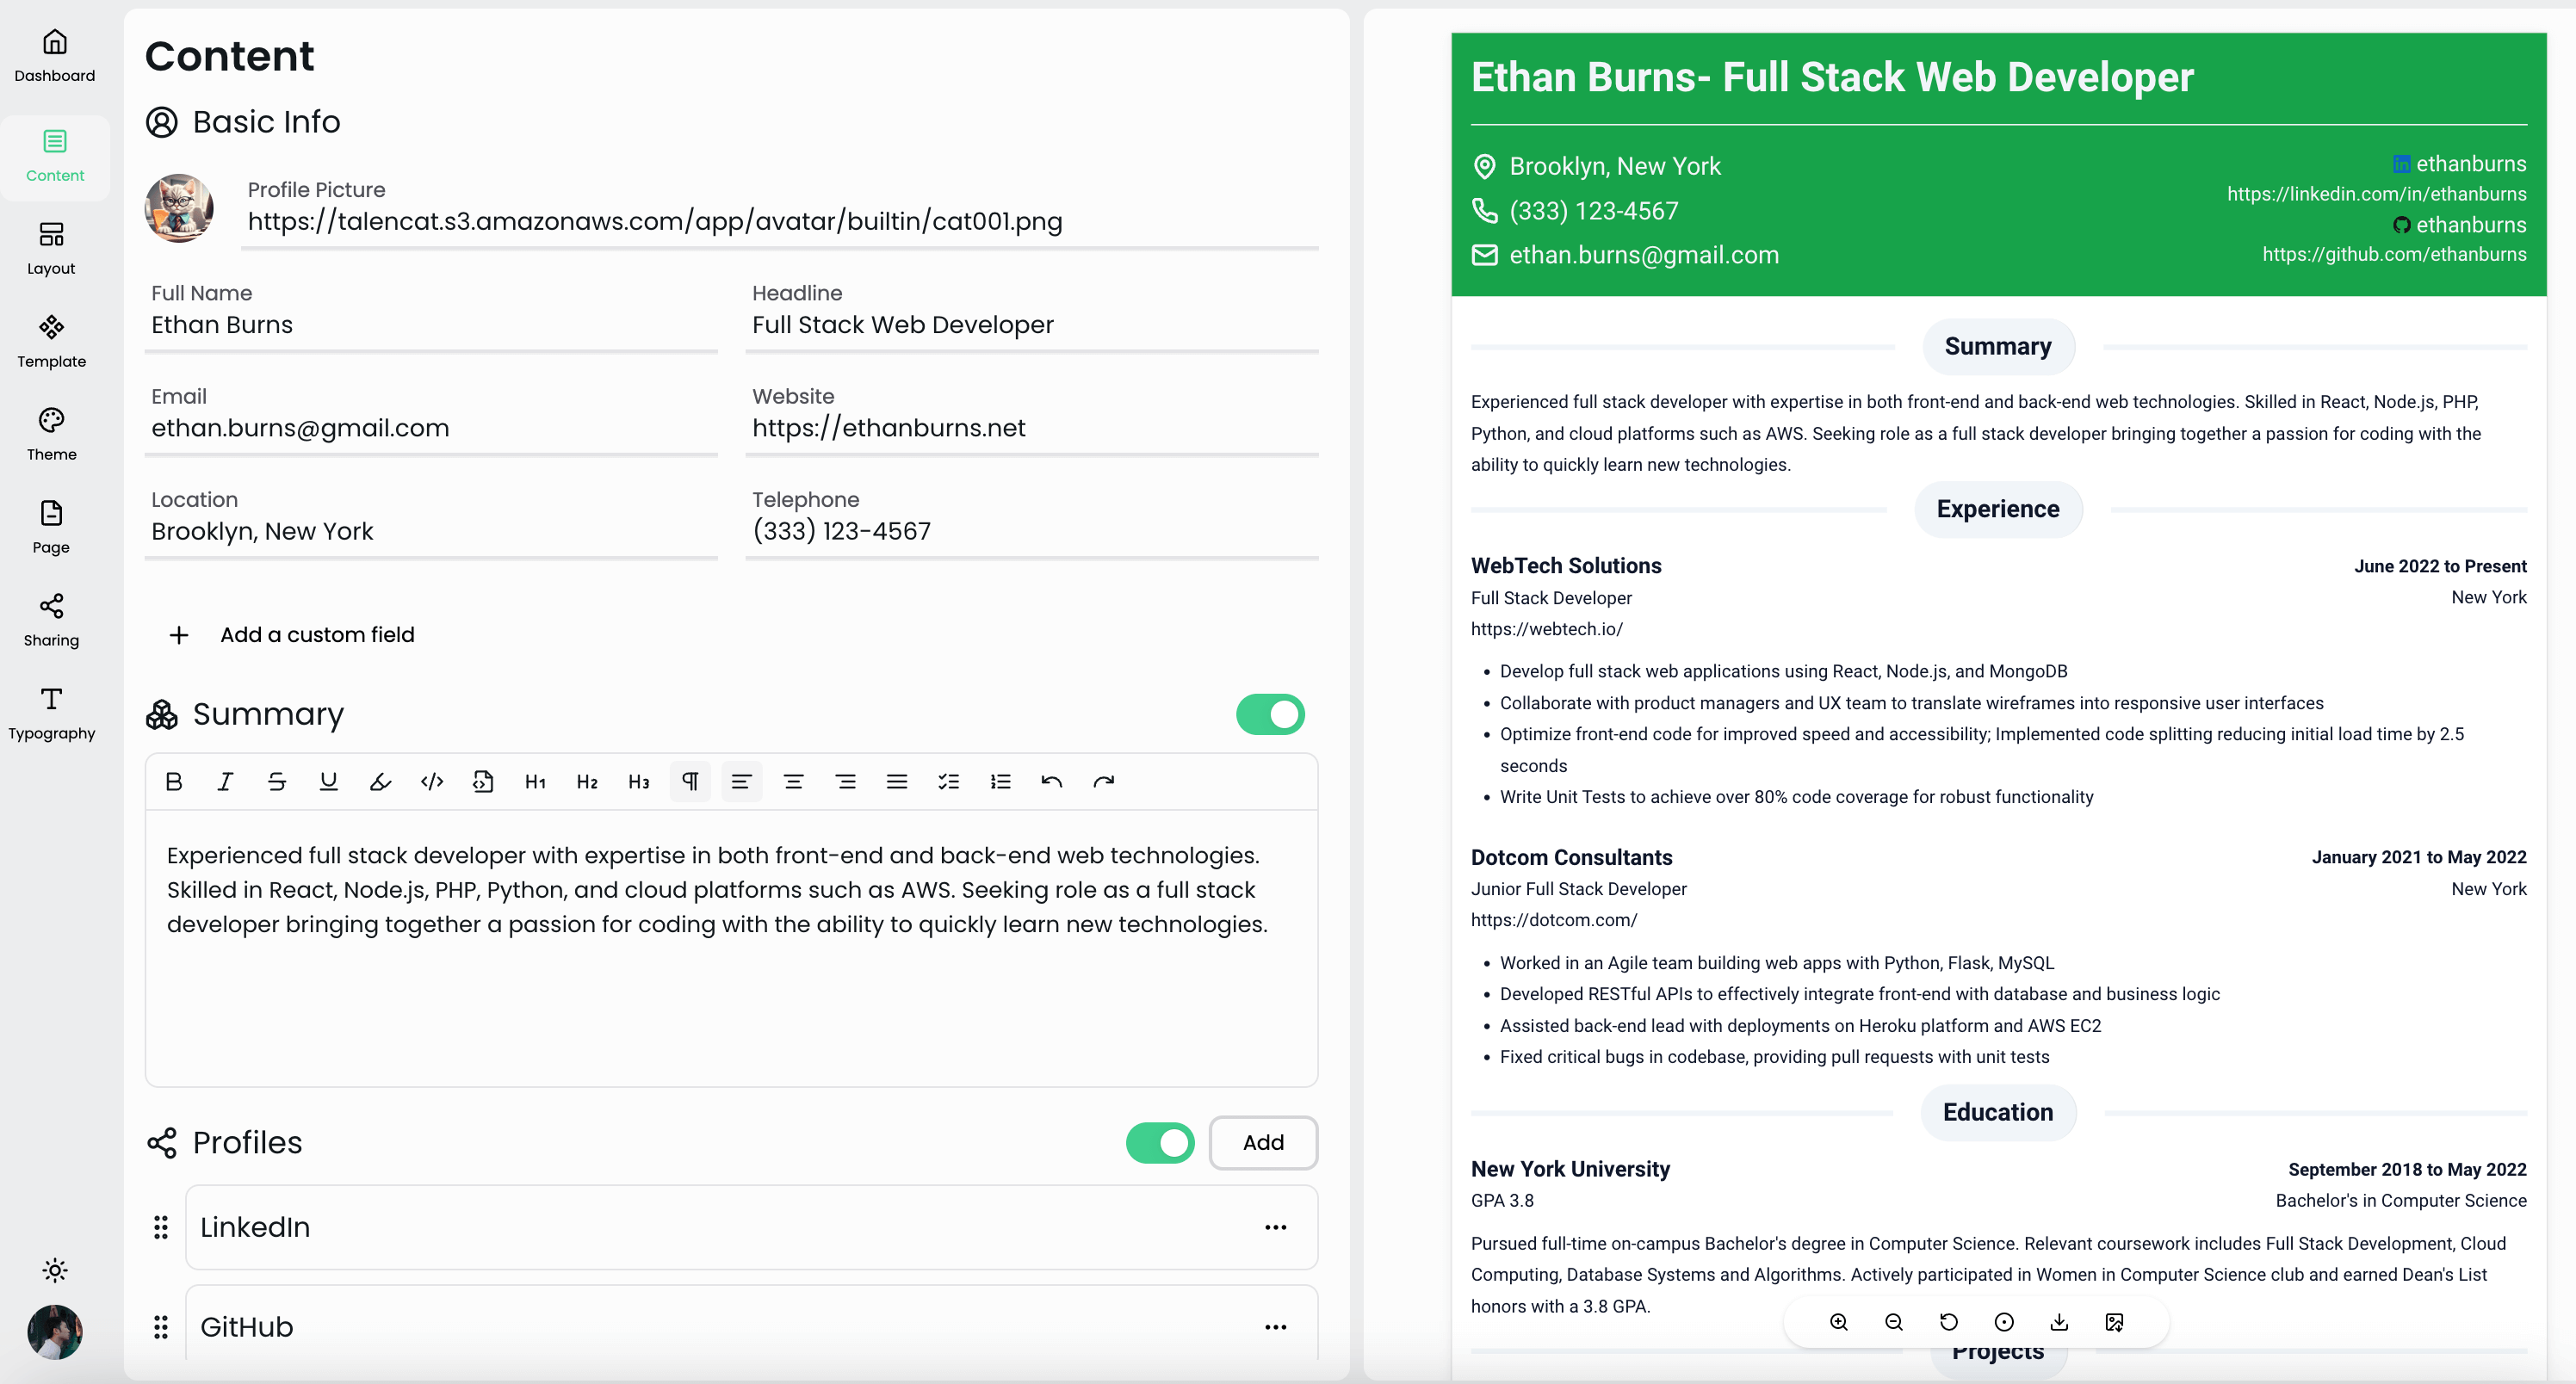 edit your resume info